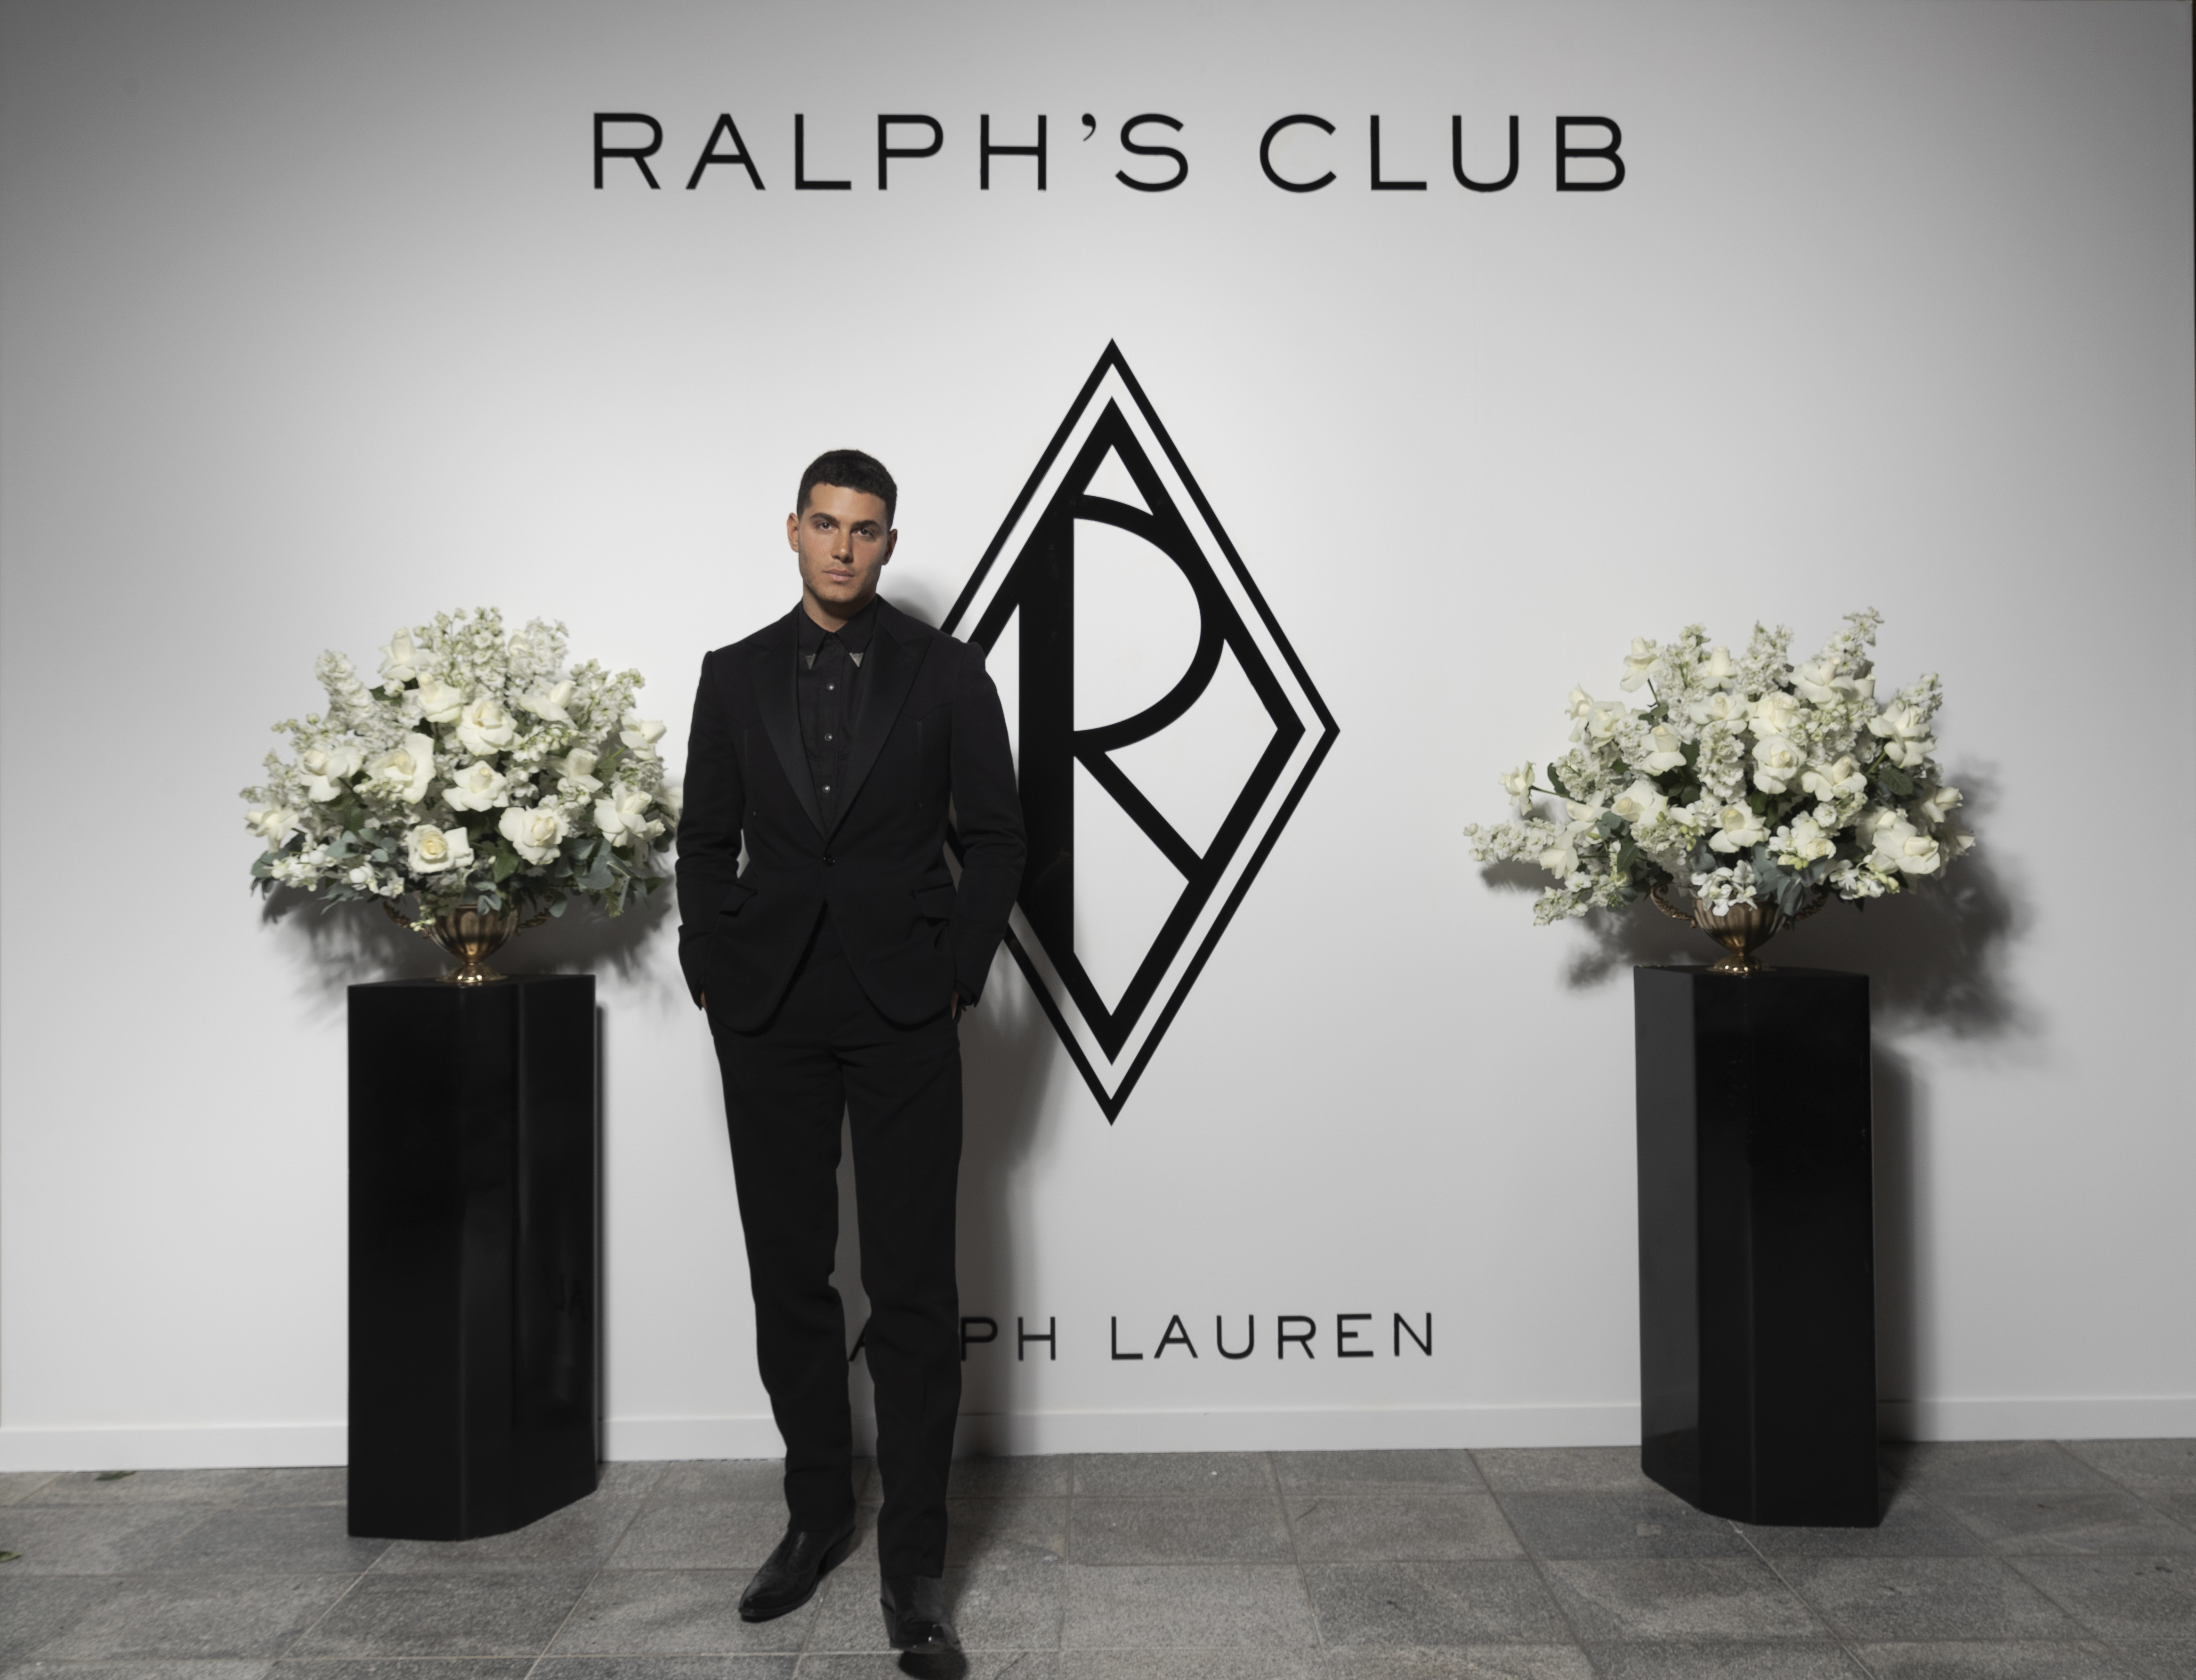 RALPH'S CLUB